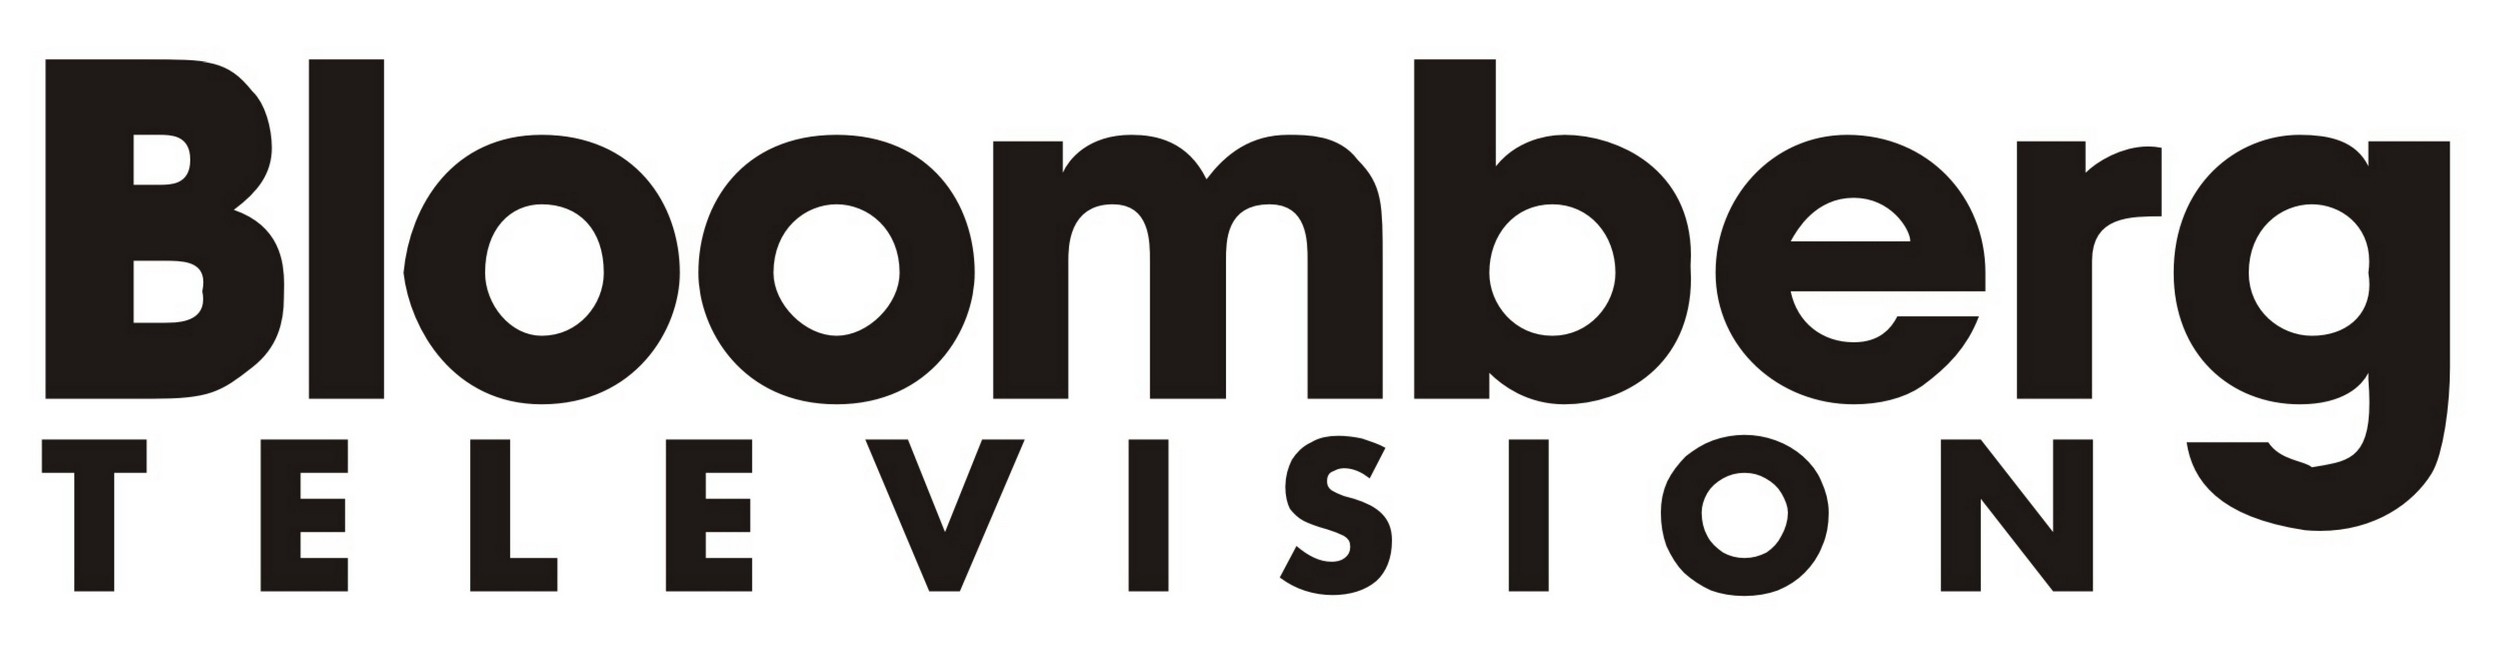 Bloomberg Television Logo [EPS-PDF]